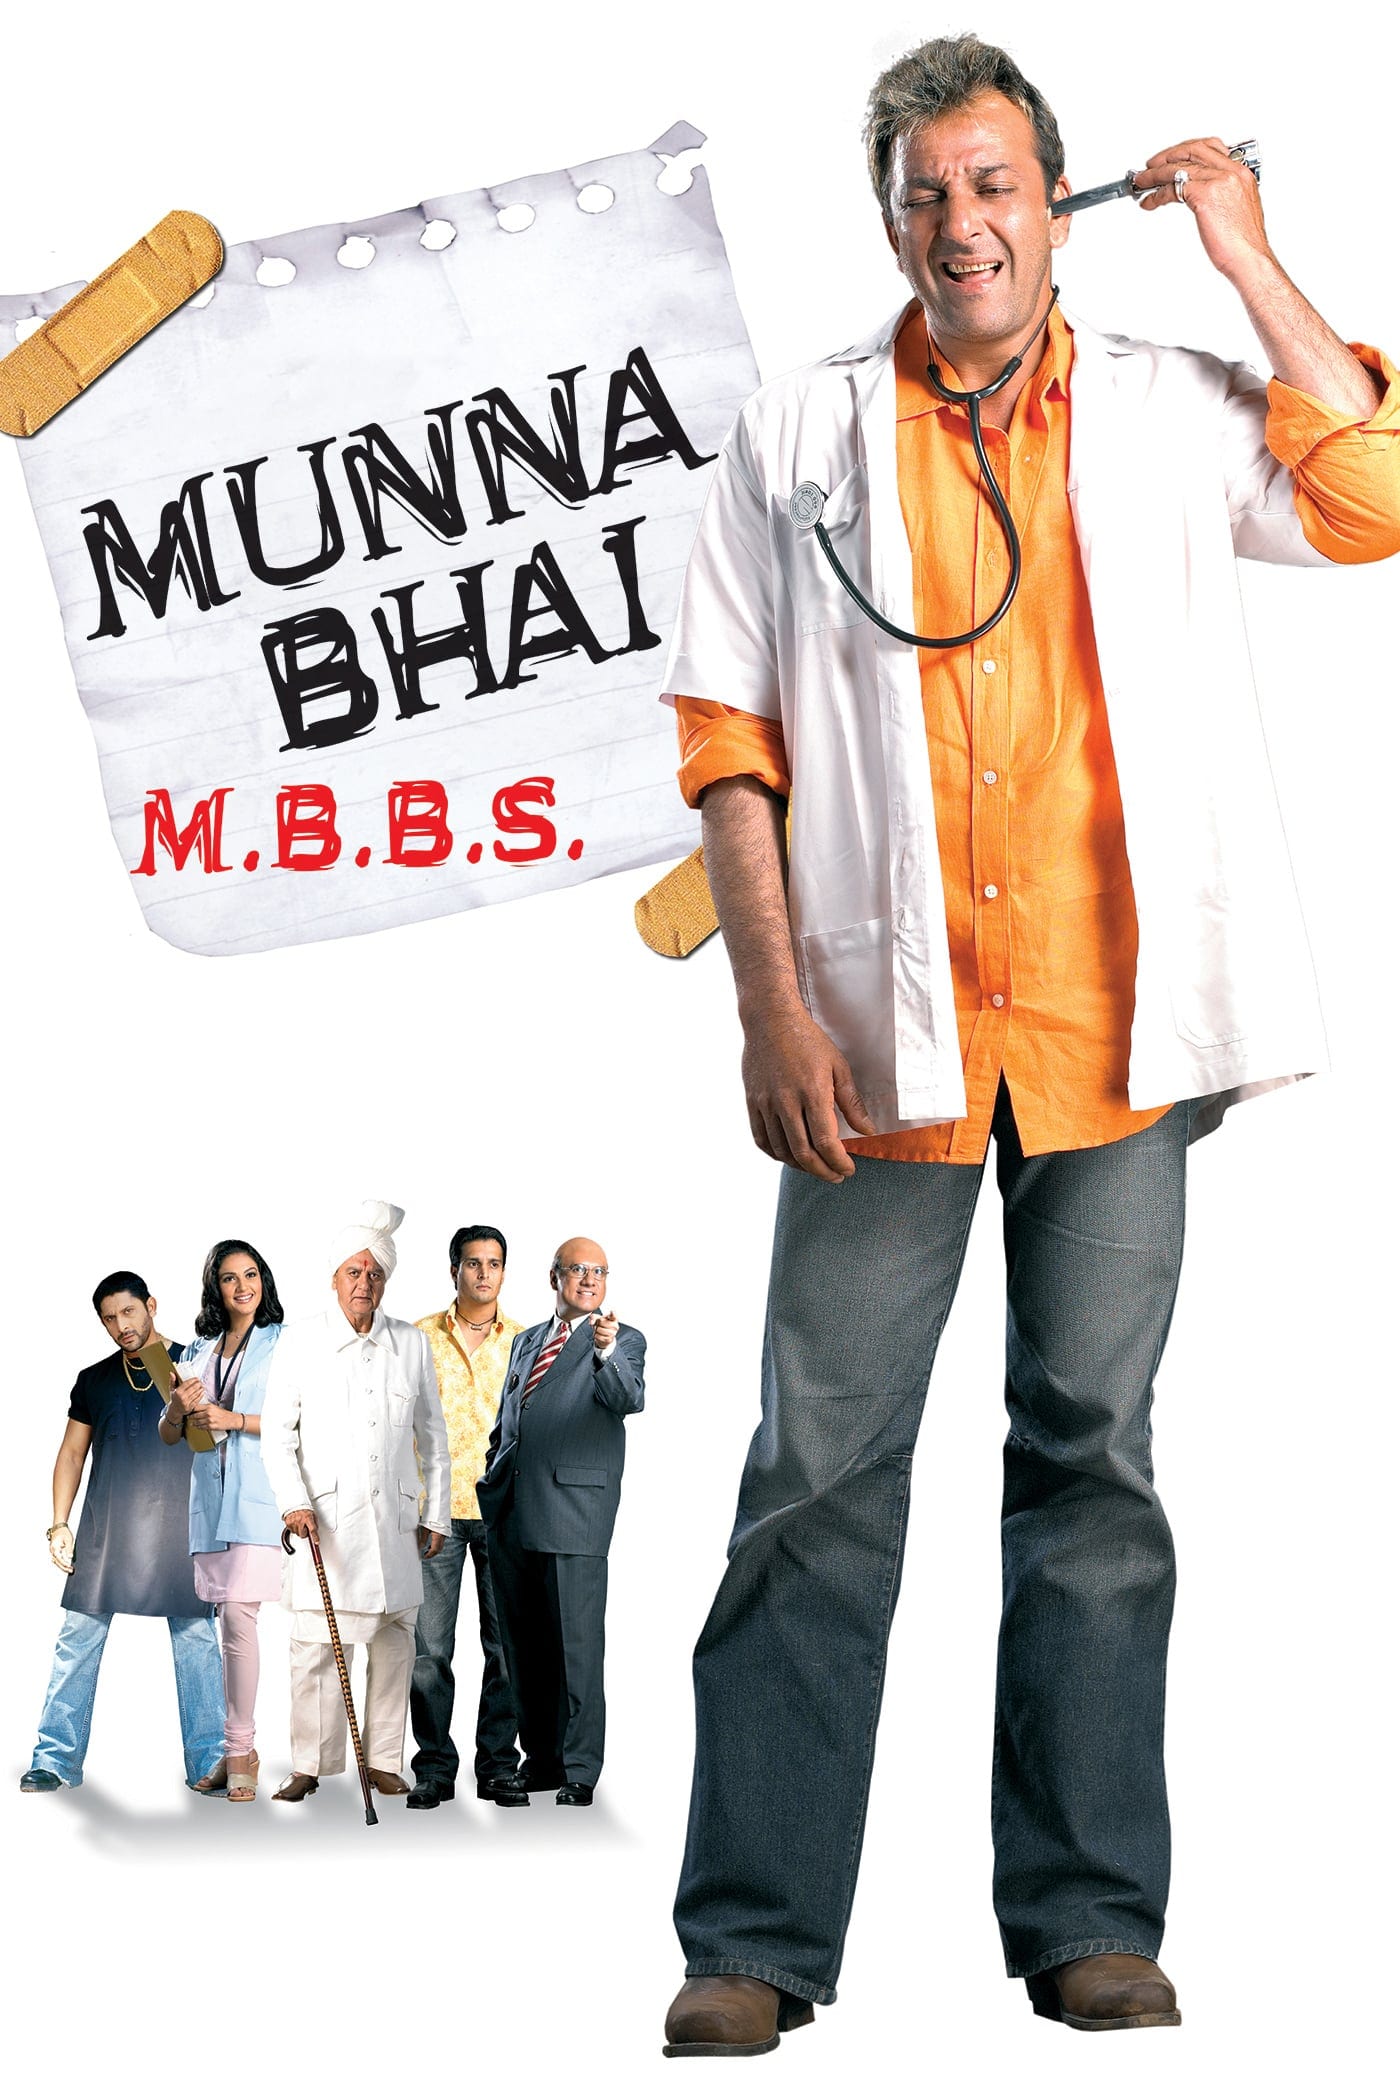 Poster for the movie "Munna Bhai M.B.B.S."